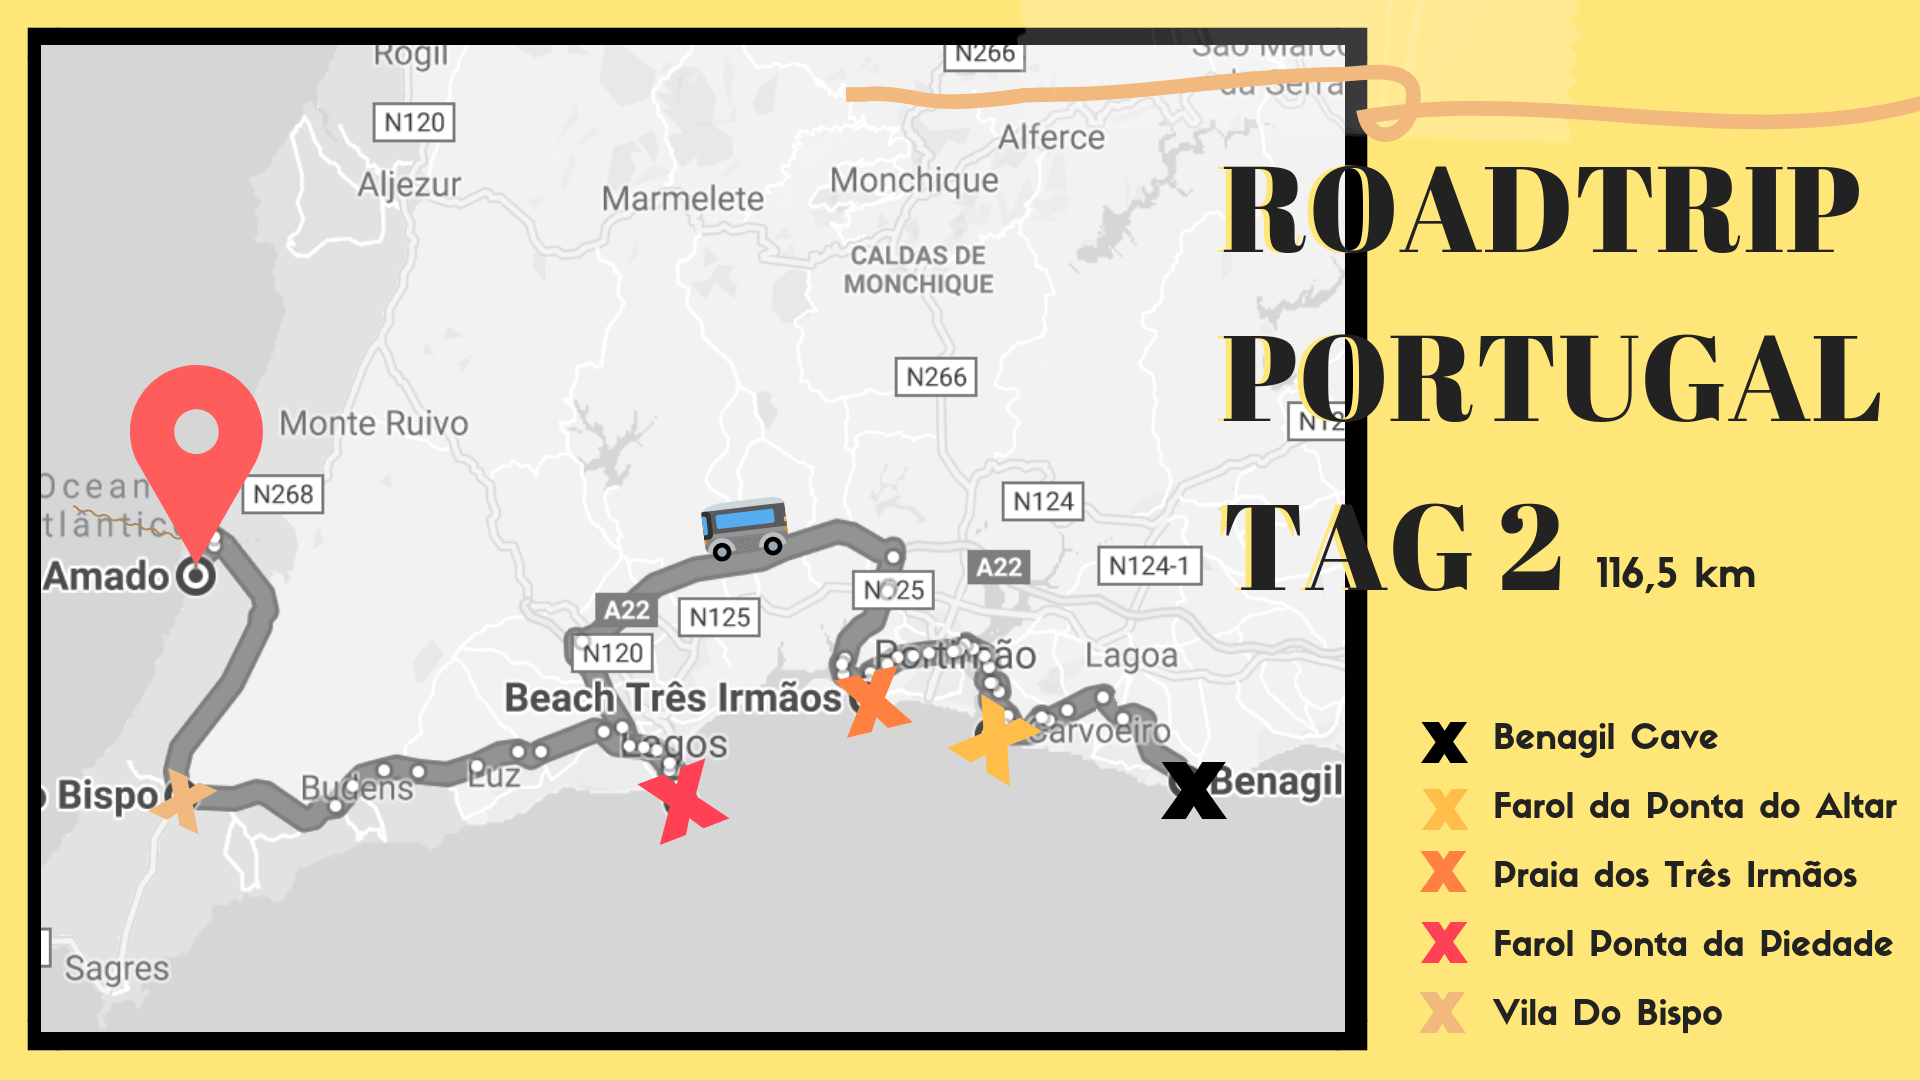 Roadtrip Portugal, Route Tag 2, 20